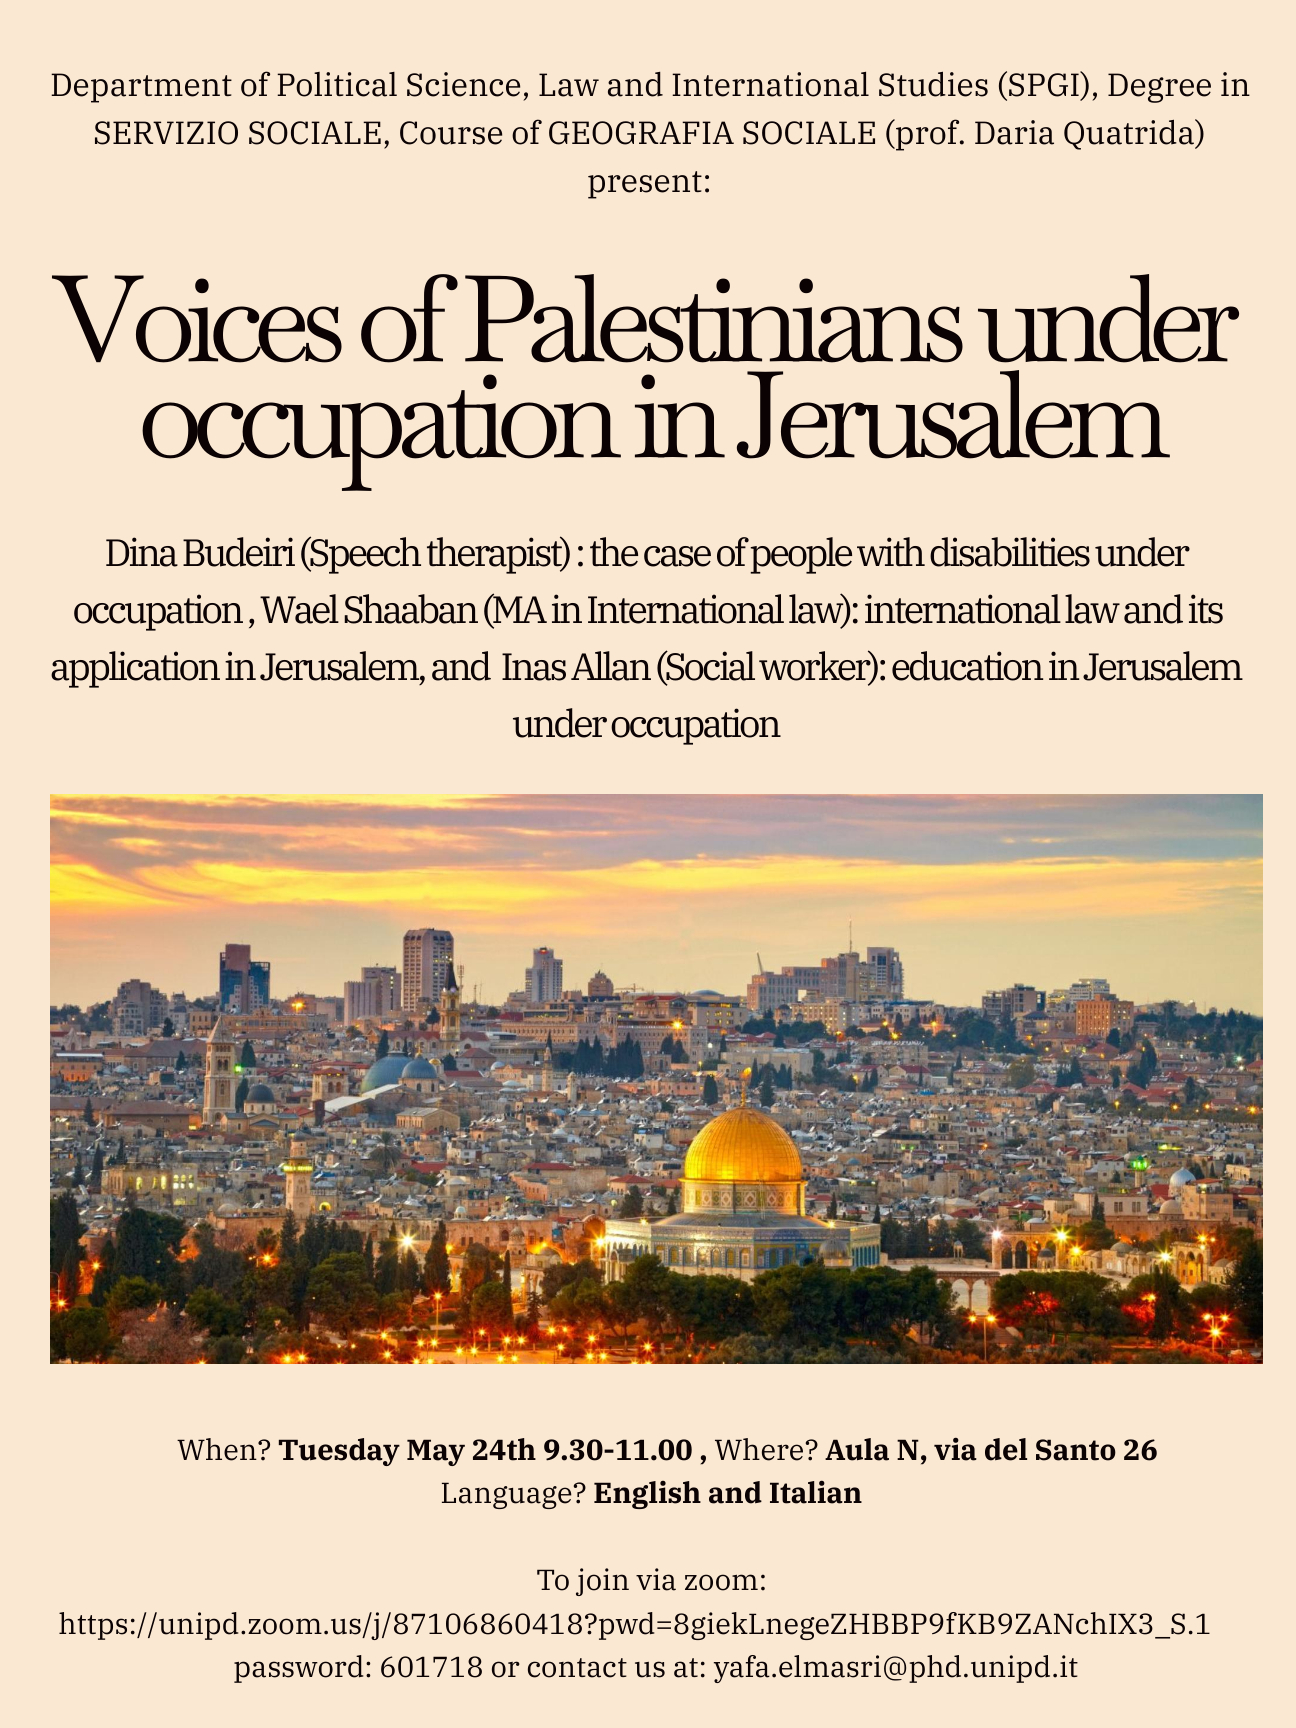 Attachment voices of palestine lecture.jpeg